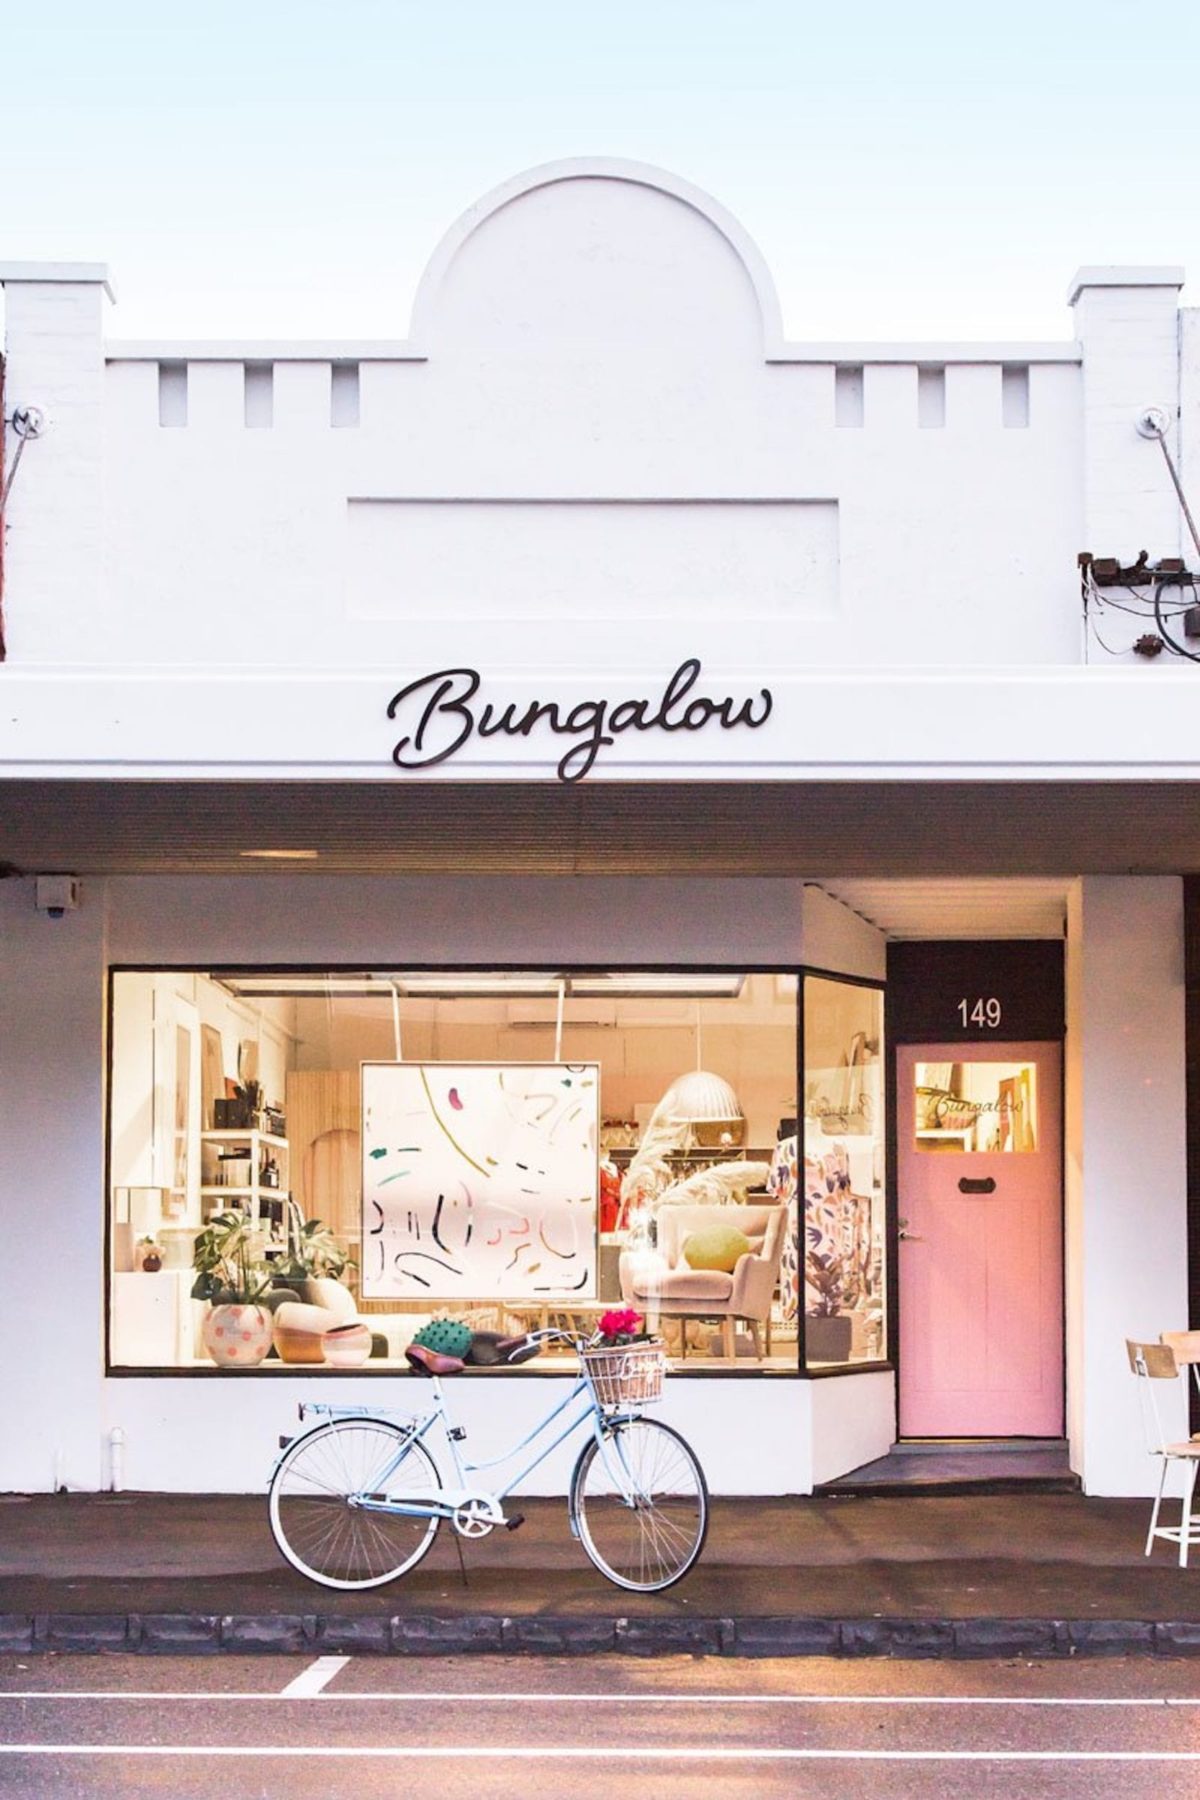 Bungalow Trading Company